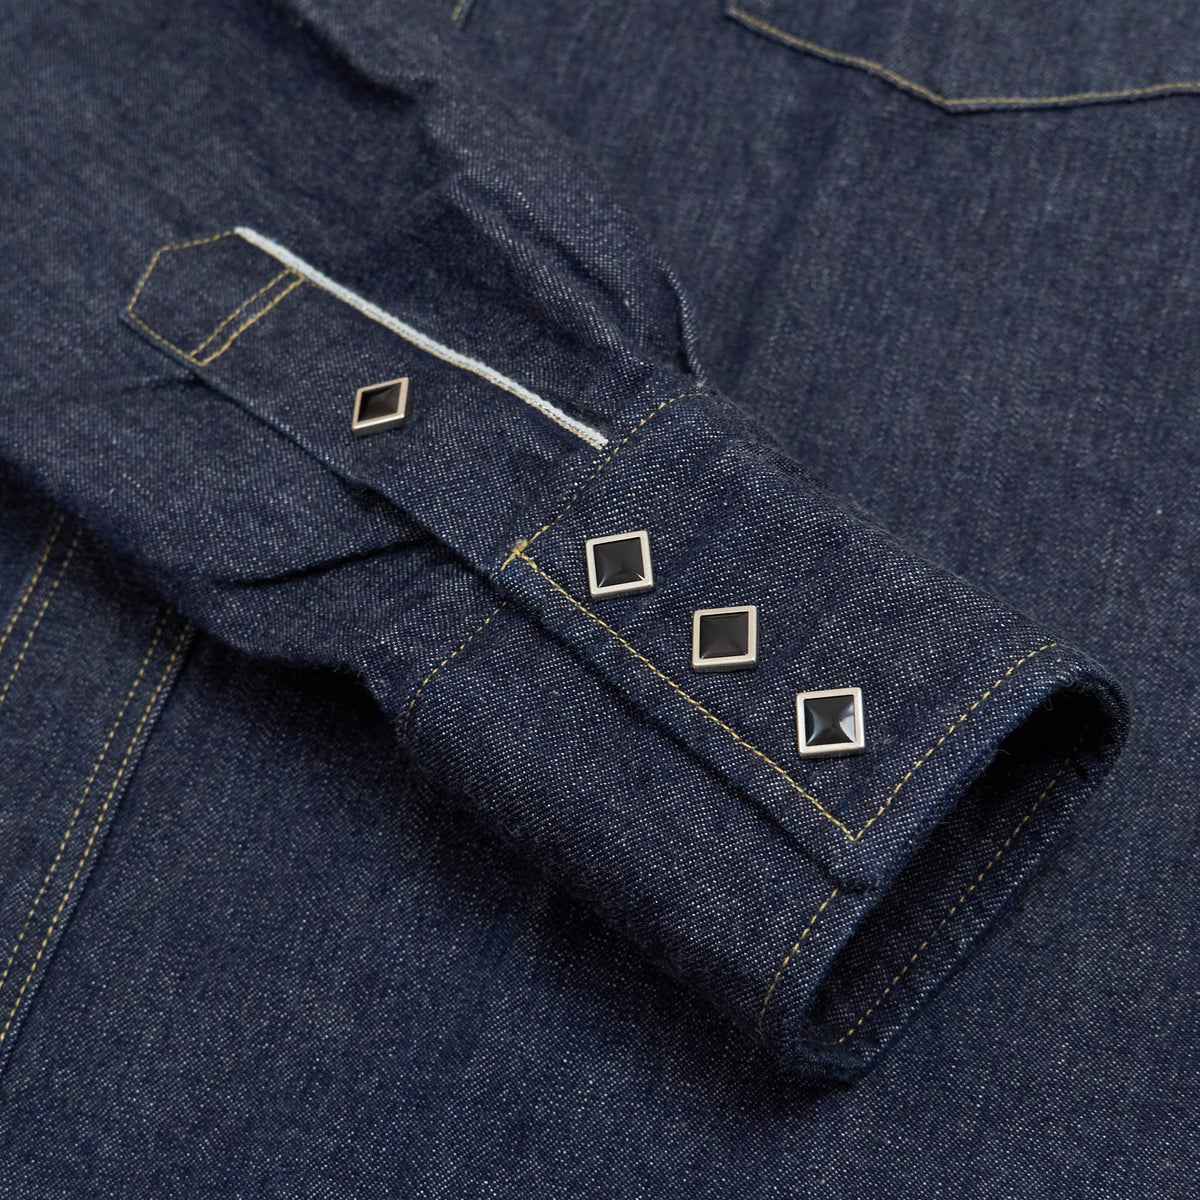 Samurai Jeans 10oz Western style Selvage Denim Jeans Shirt